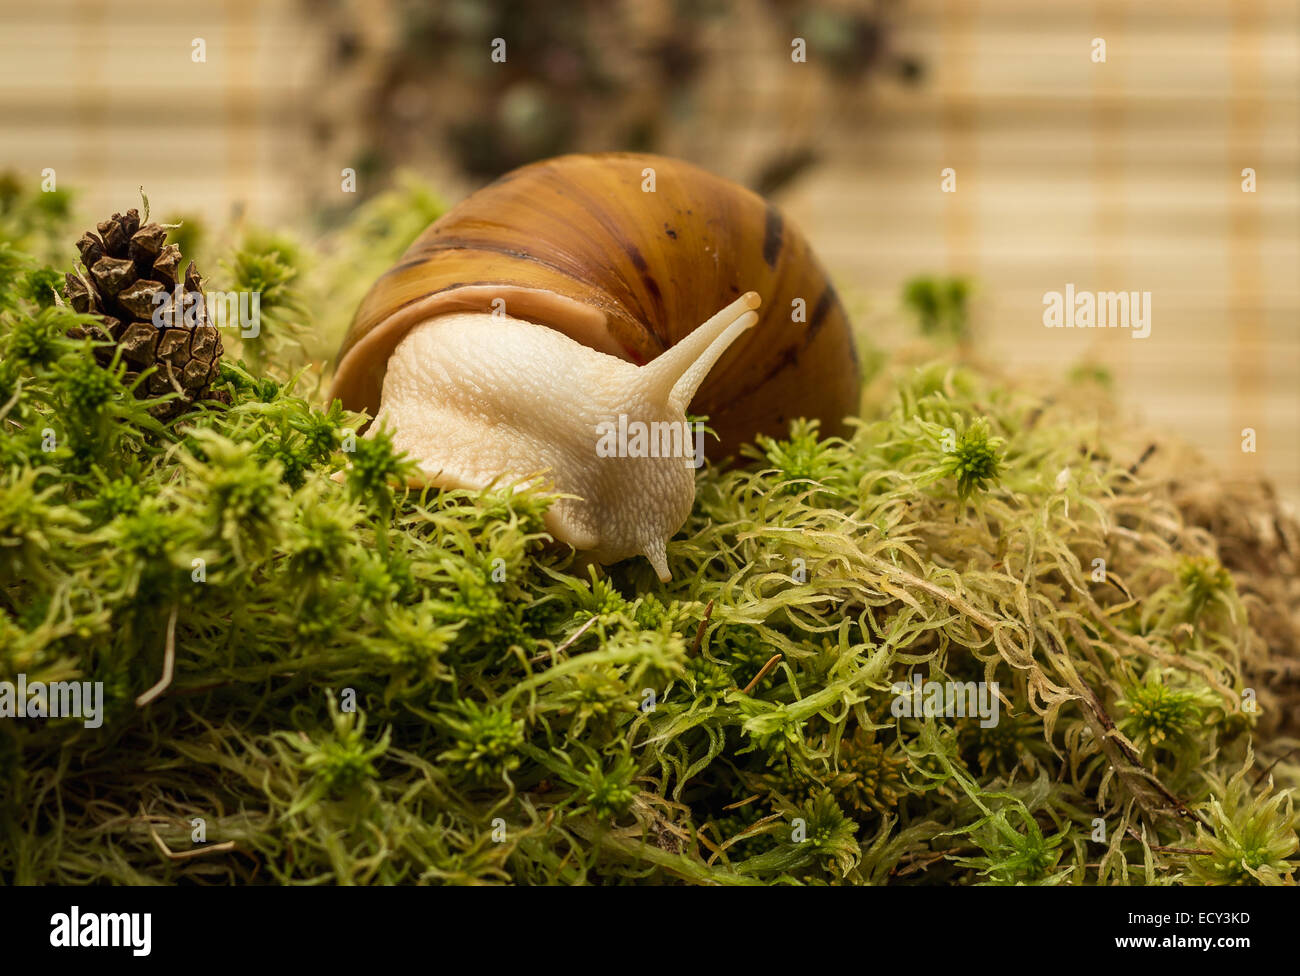 Albino snail Stock Photo